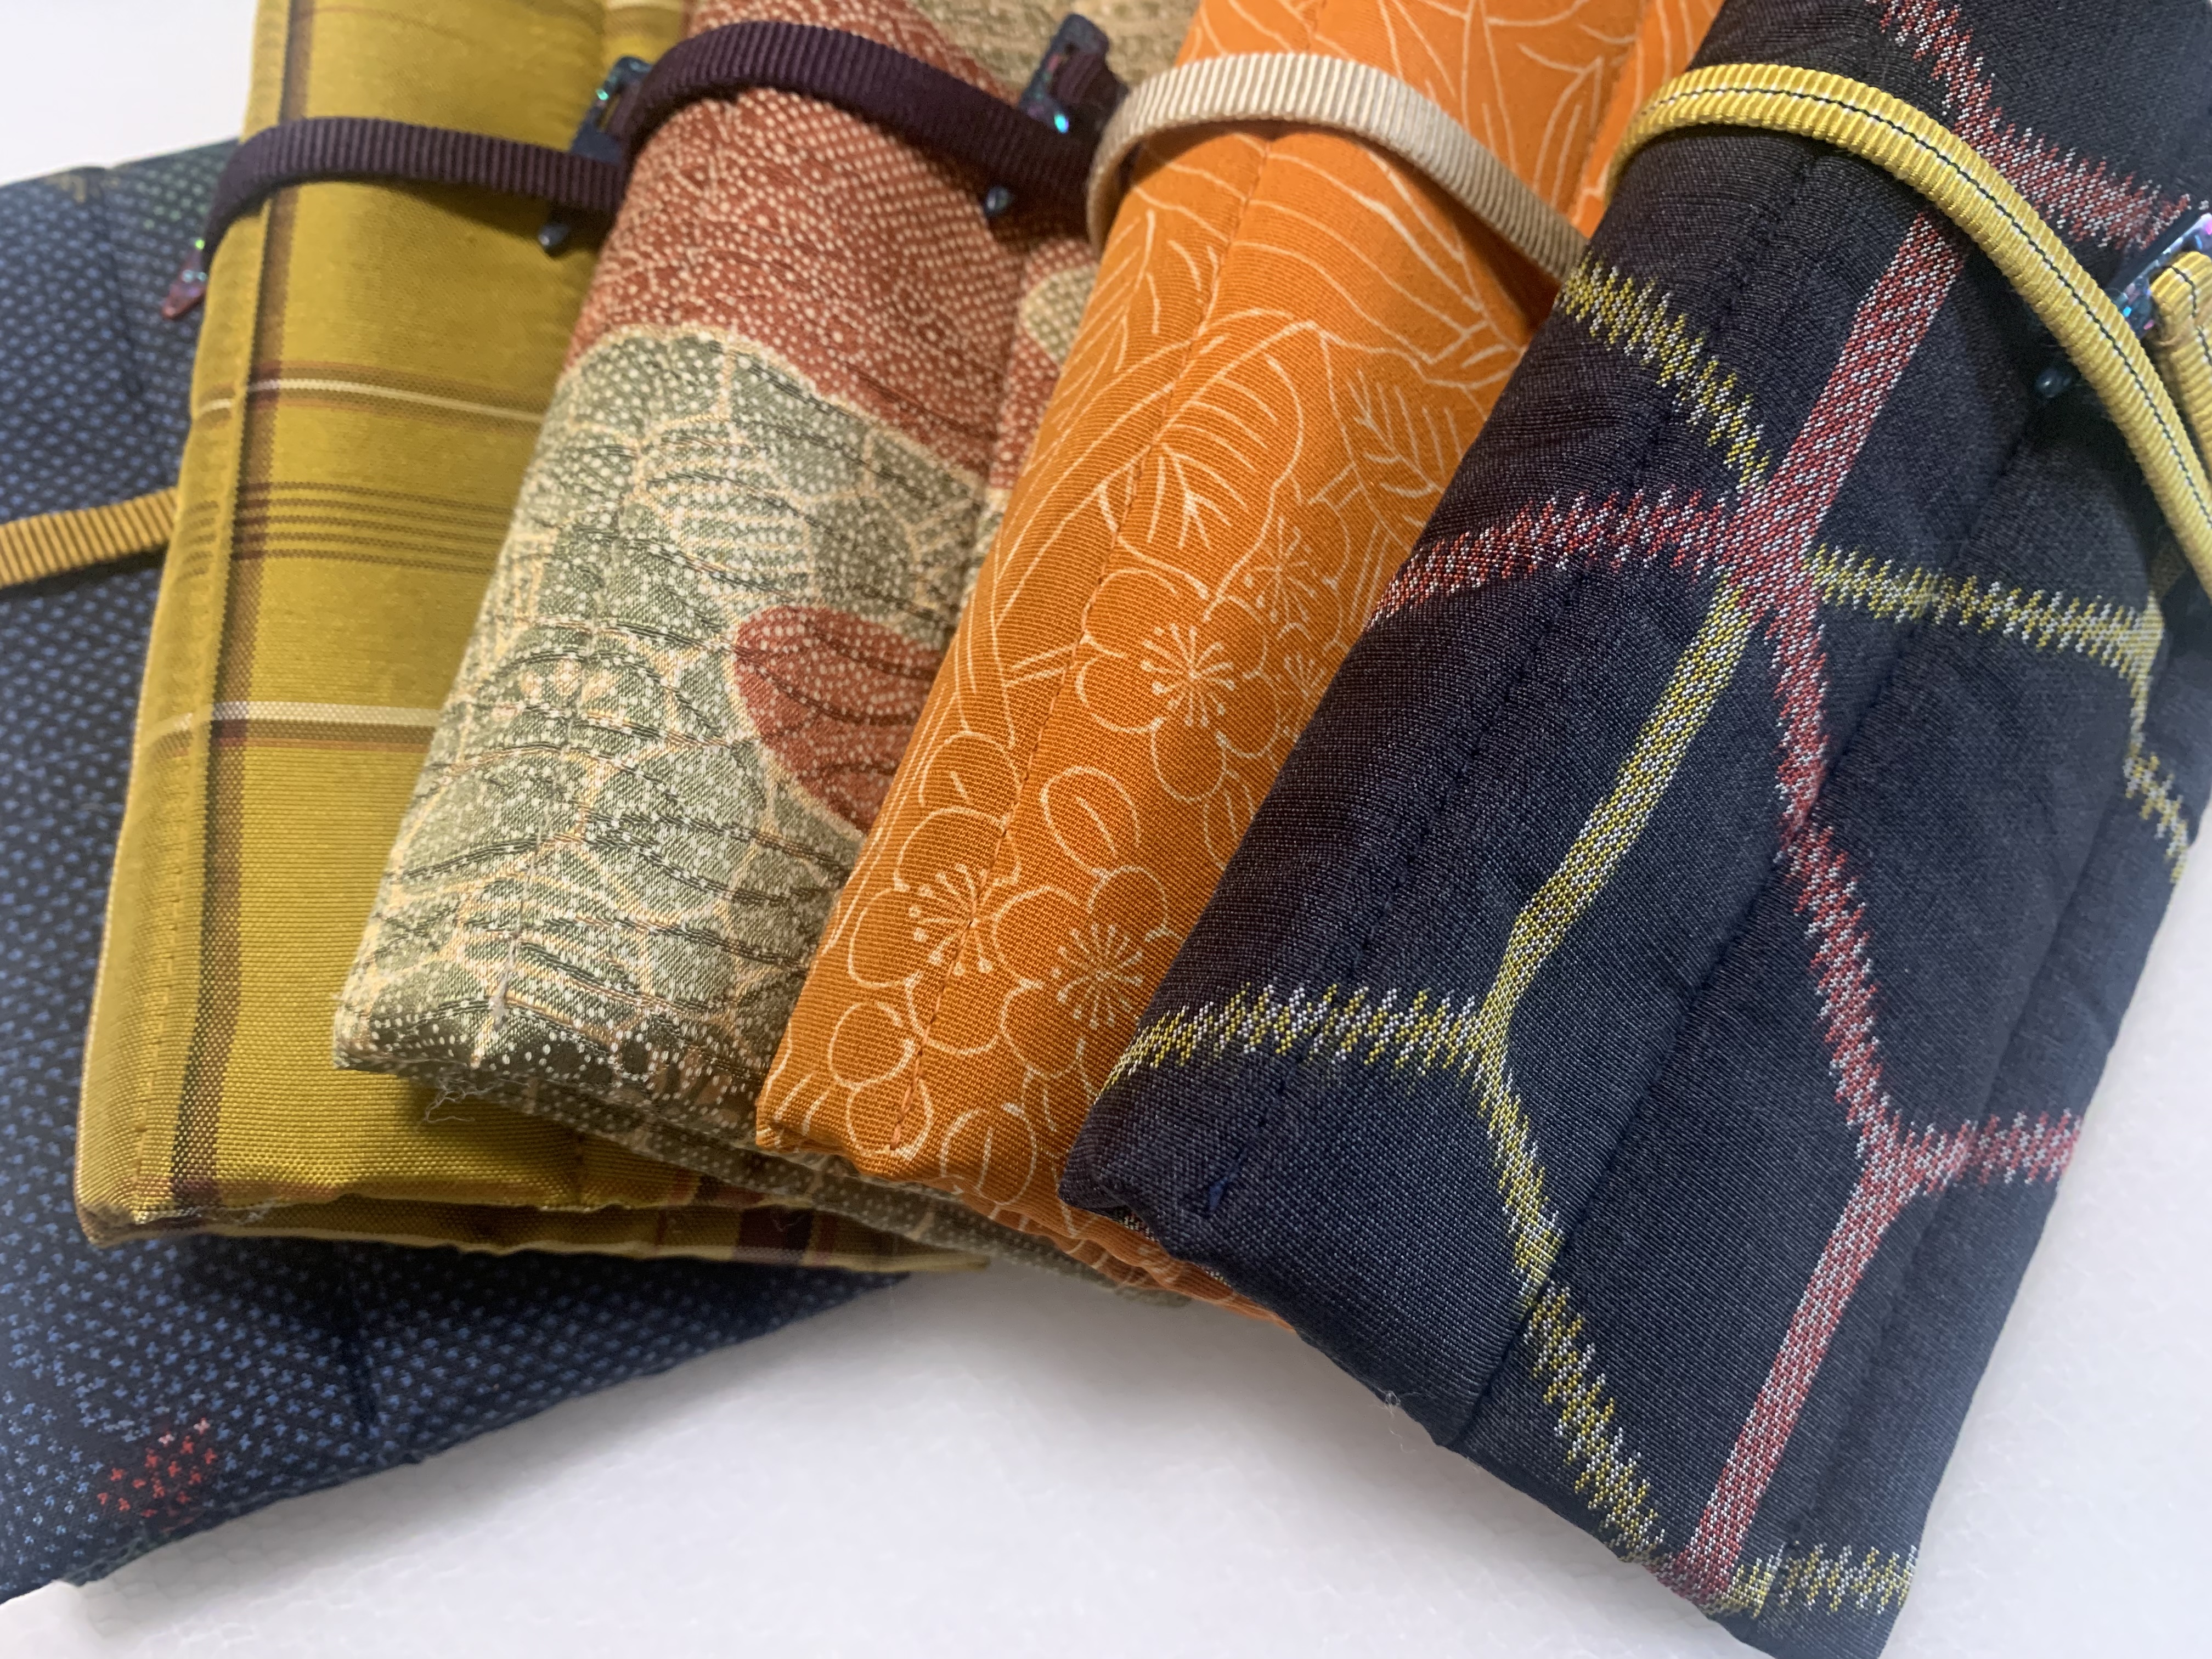 About kimono fabric silk